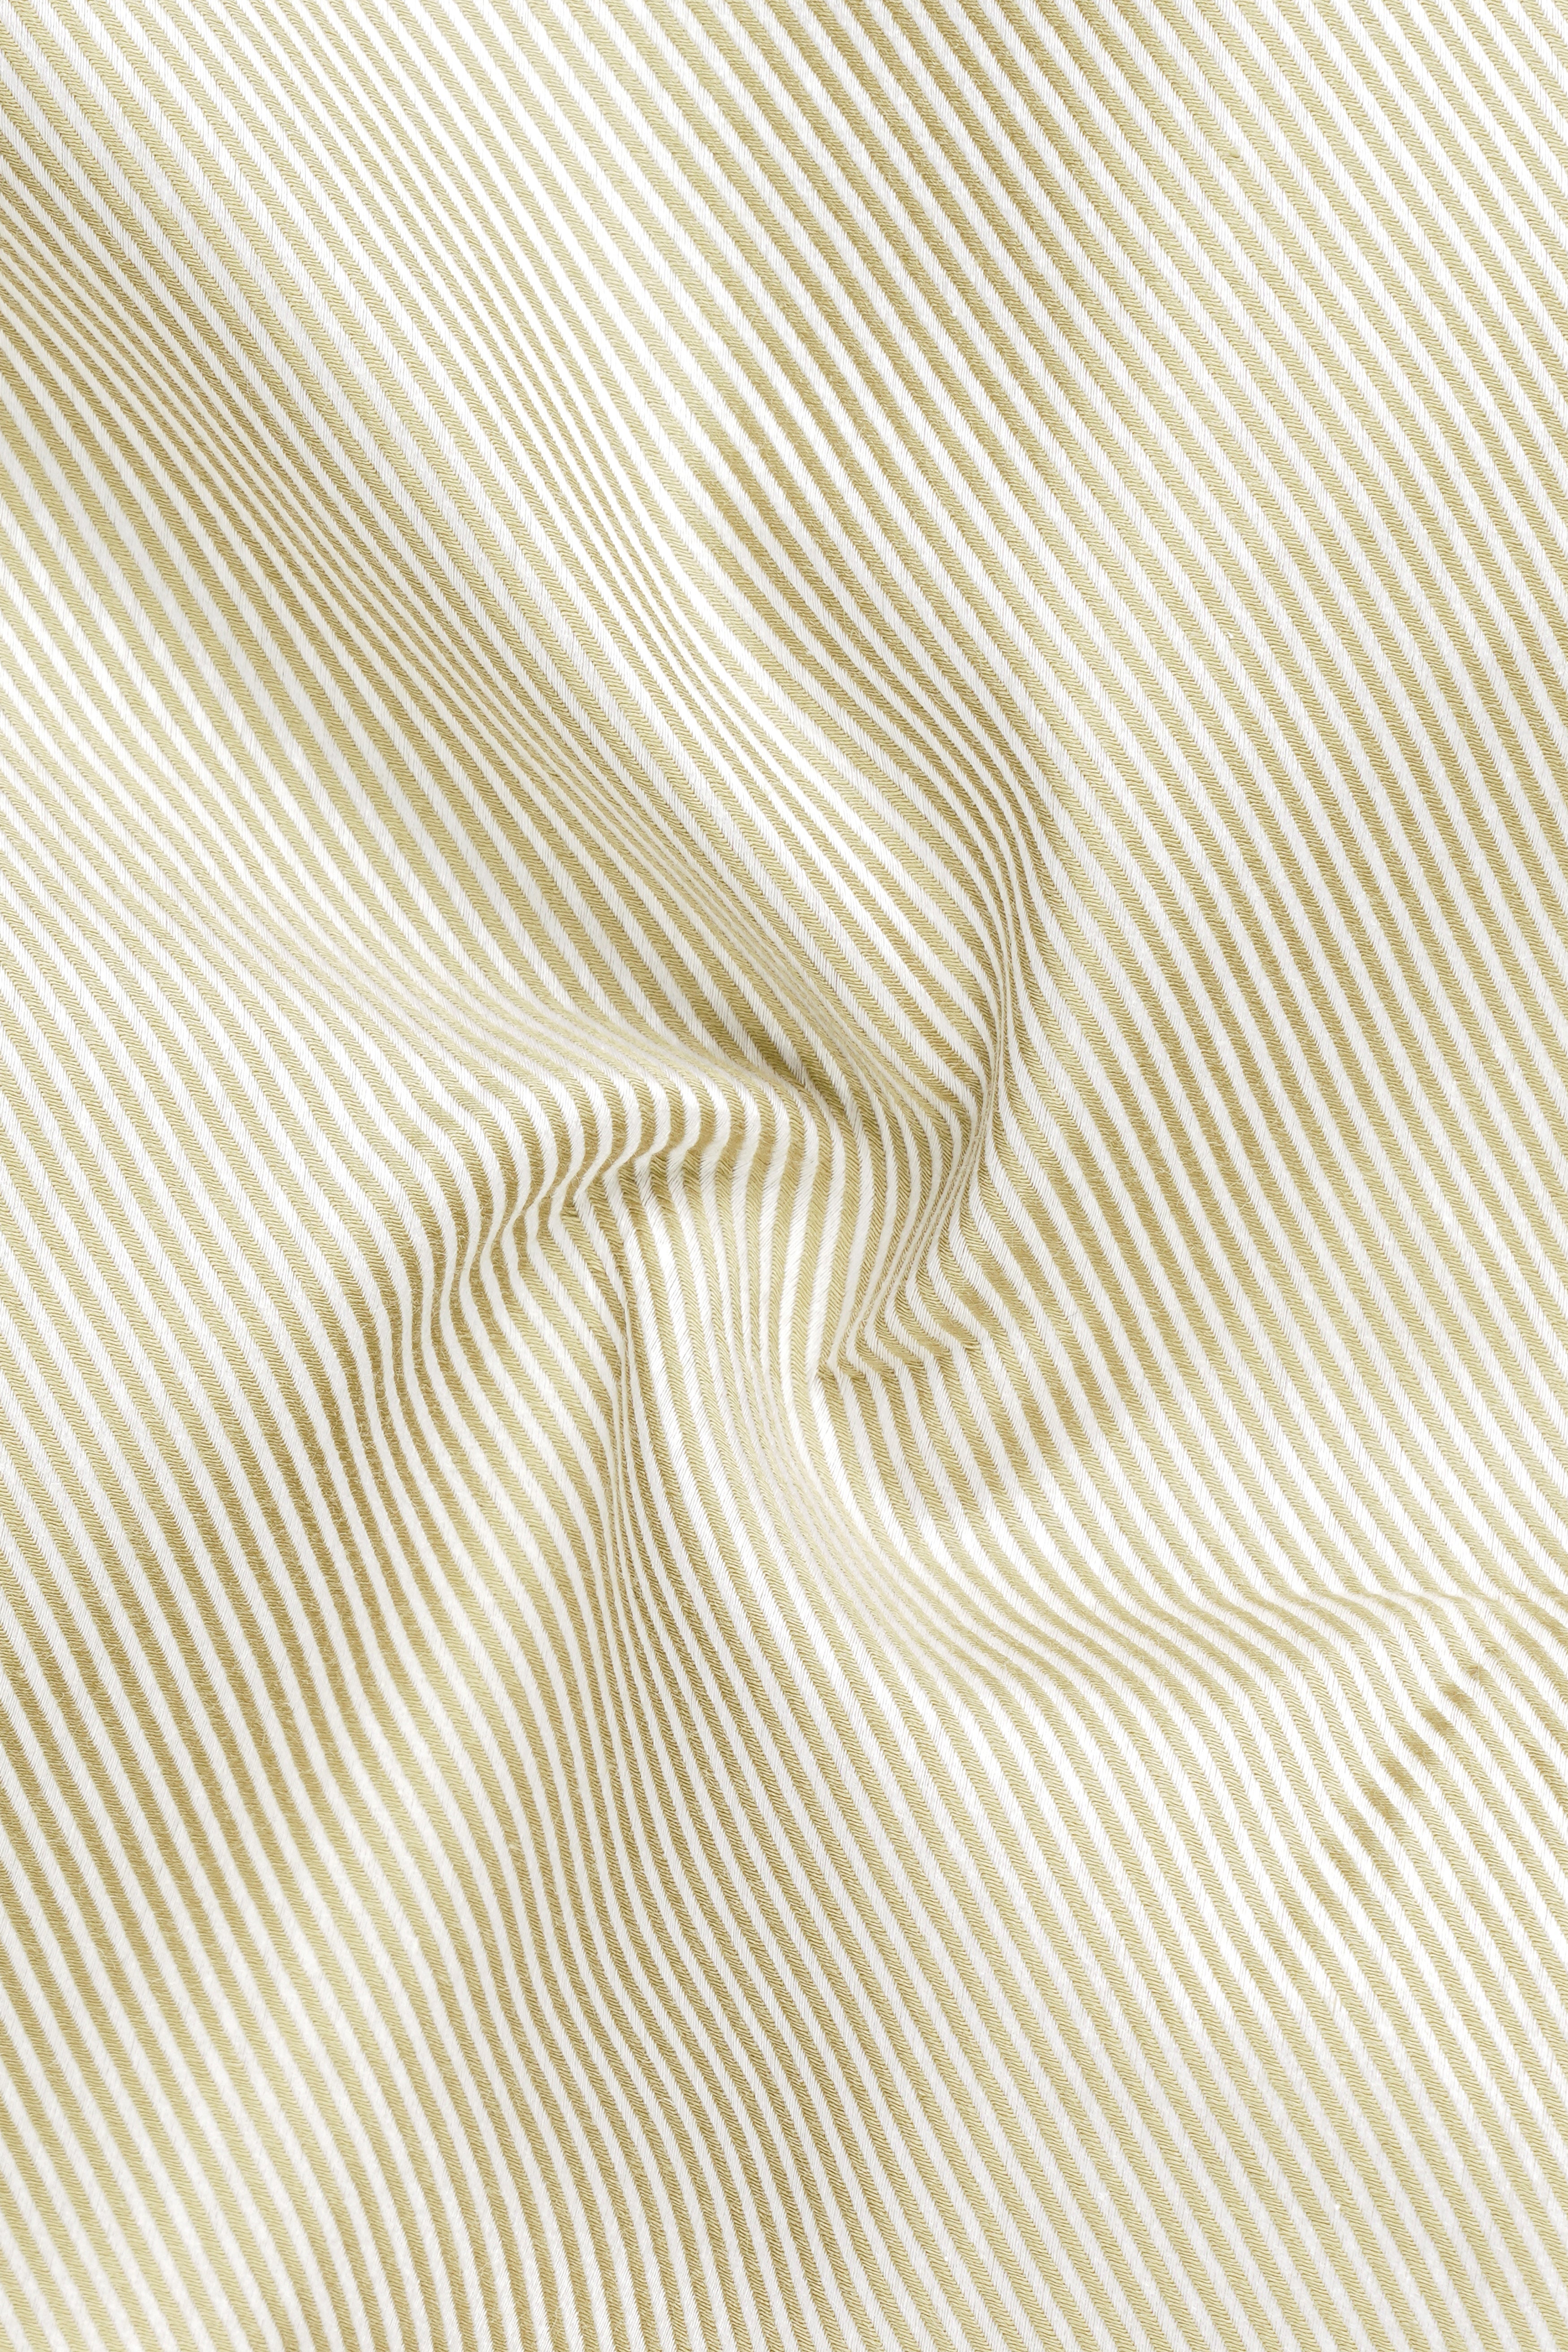 Stark Cream Pin Striped Twill Cotton Shirt